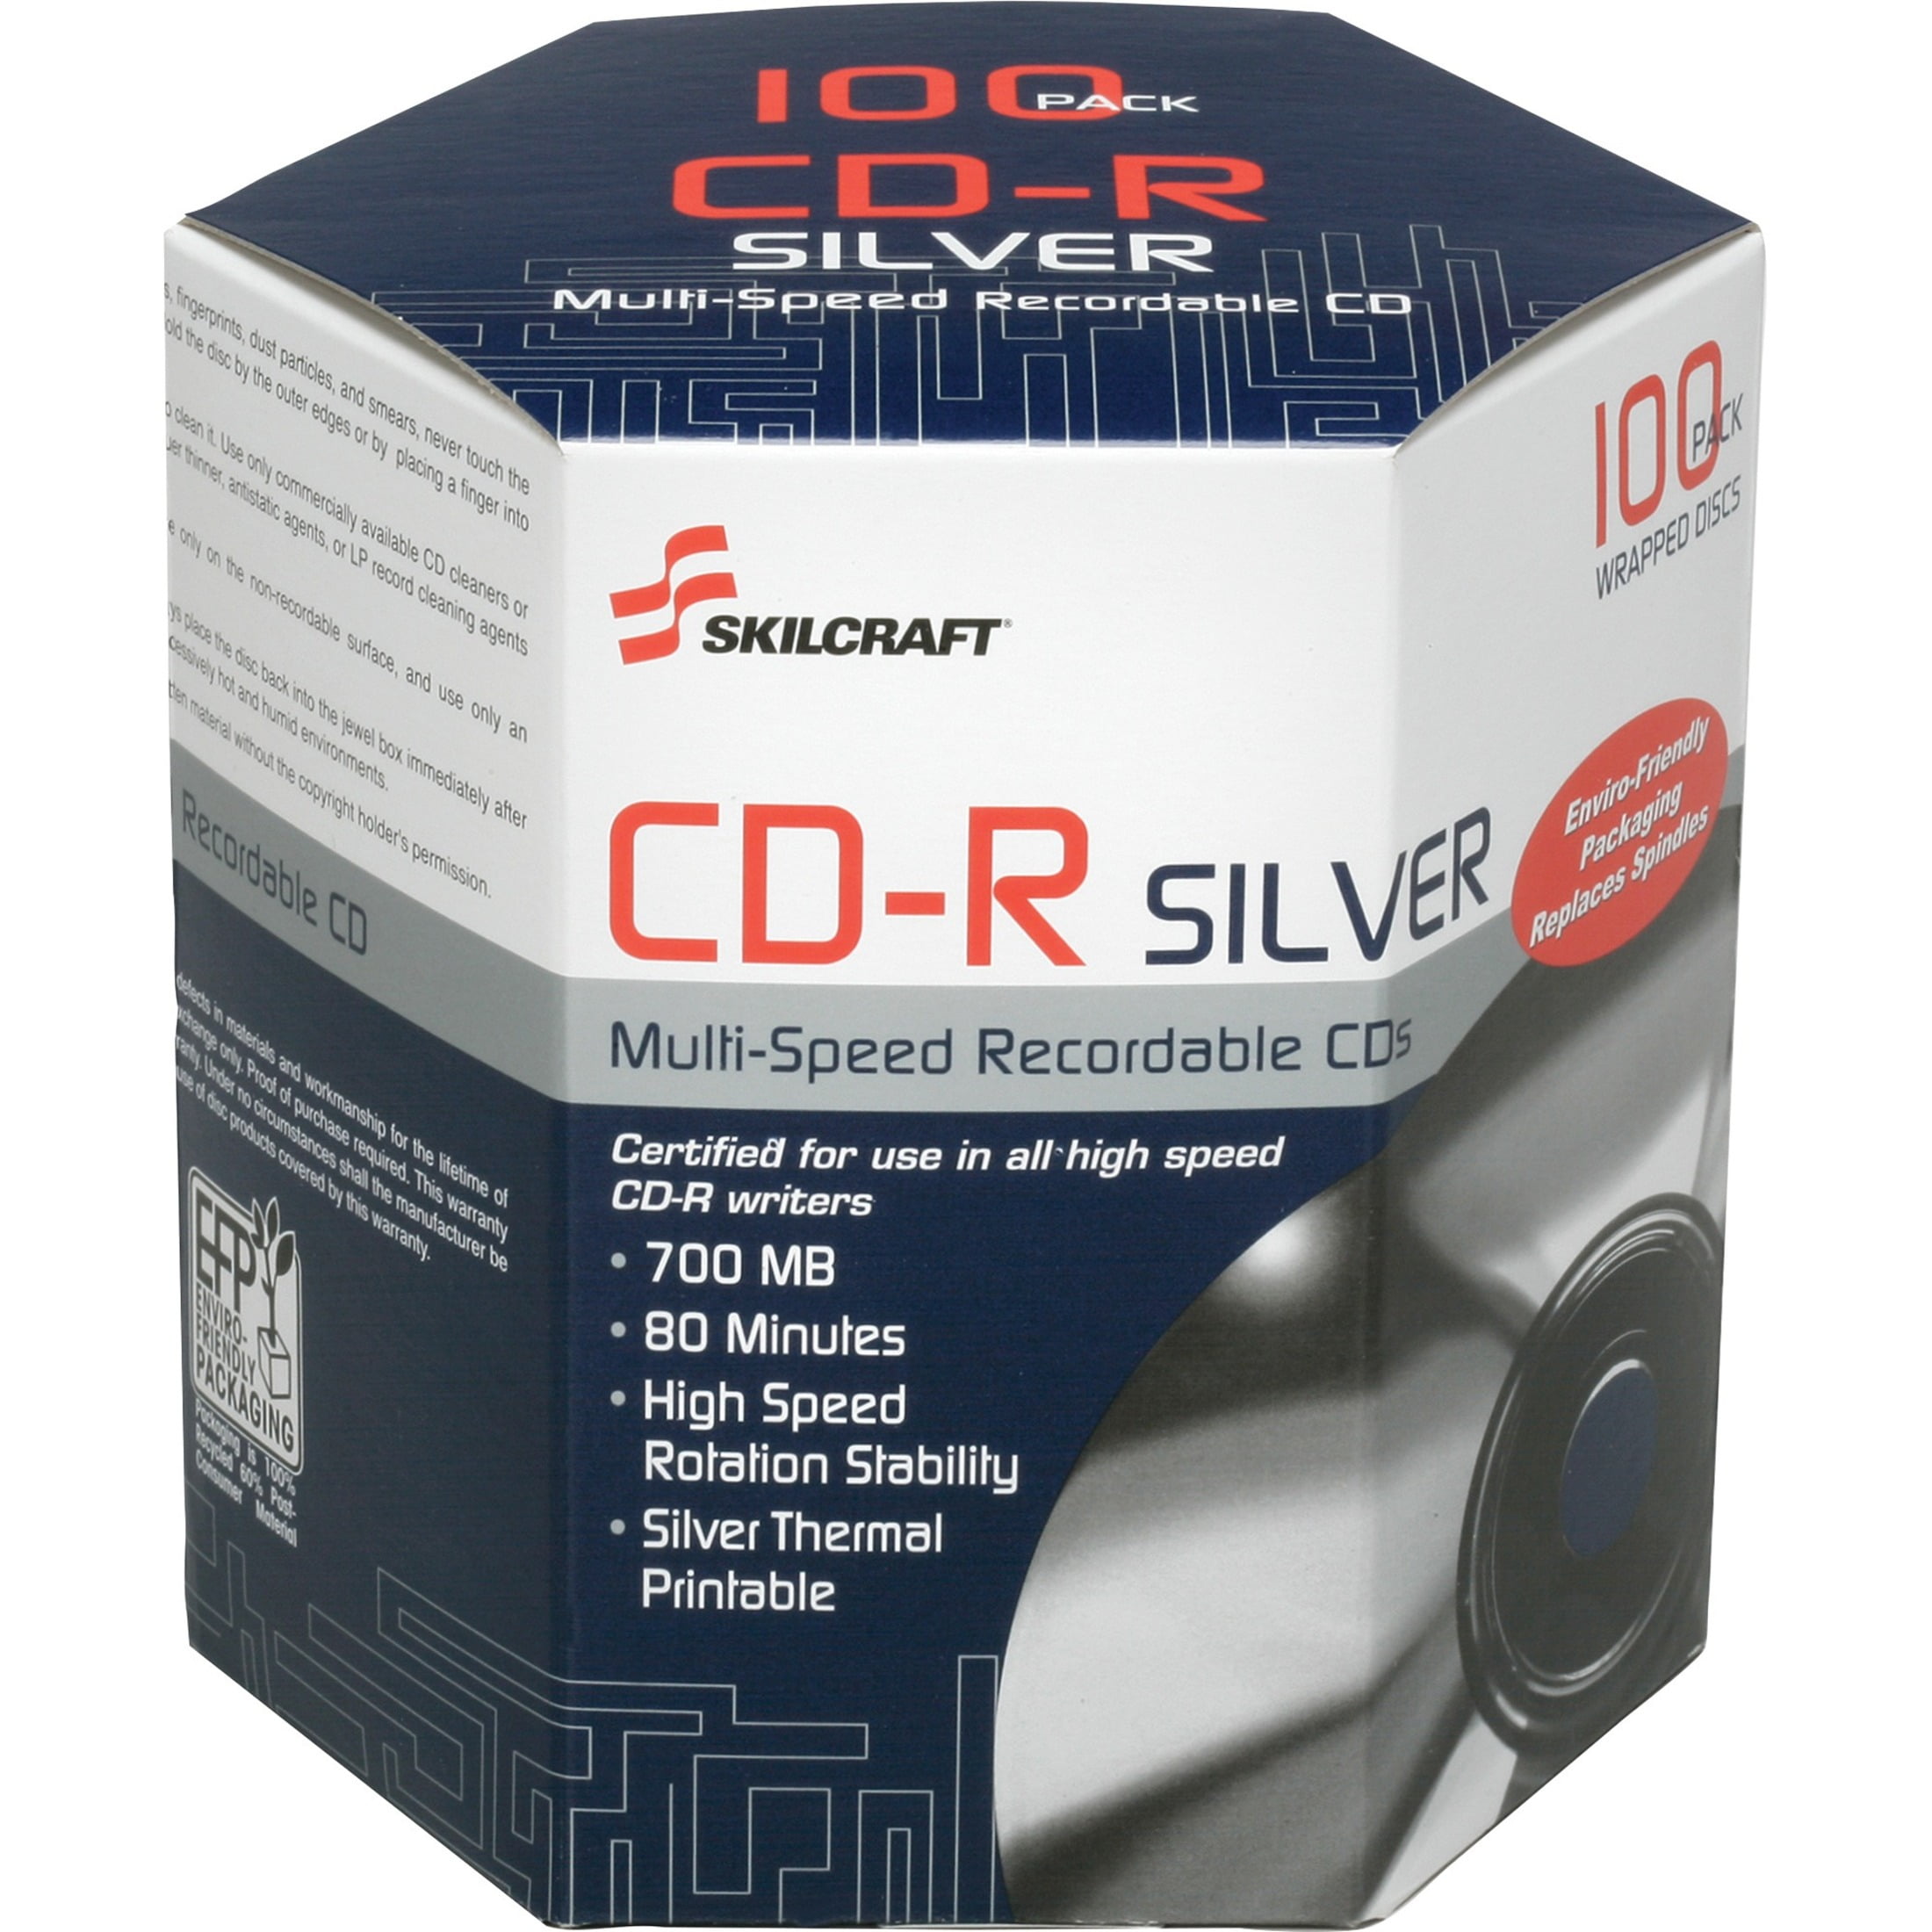 Verbatim CD-R 700MB 80 Minute 52X Recordable Blank Disc 10 Pack Wrap